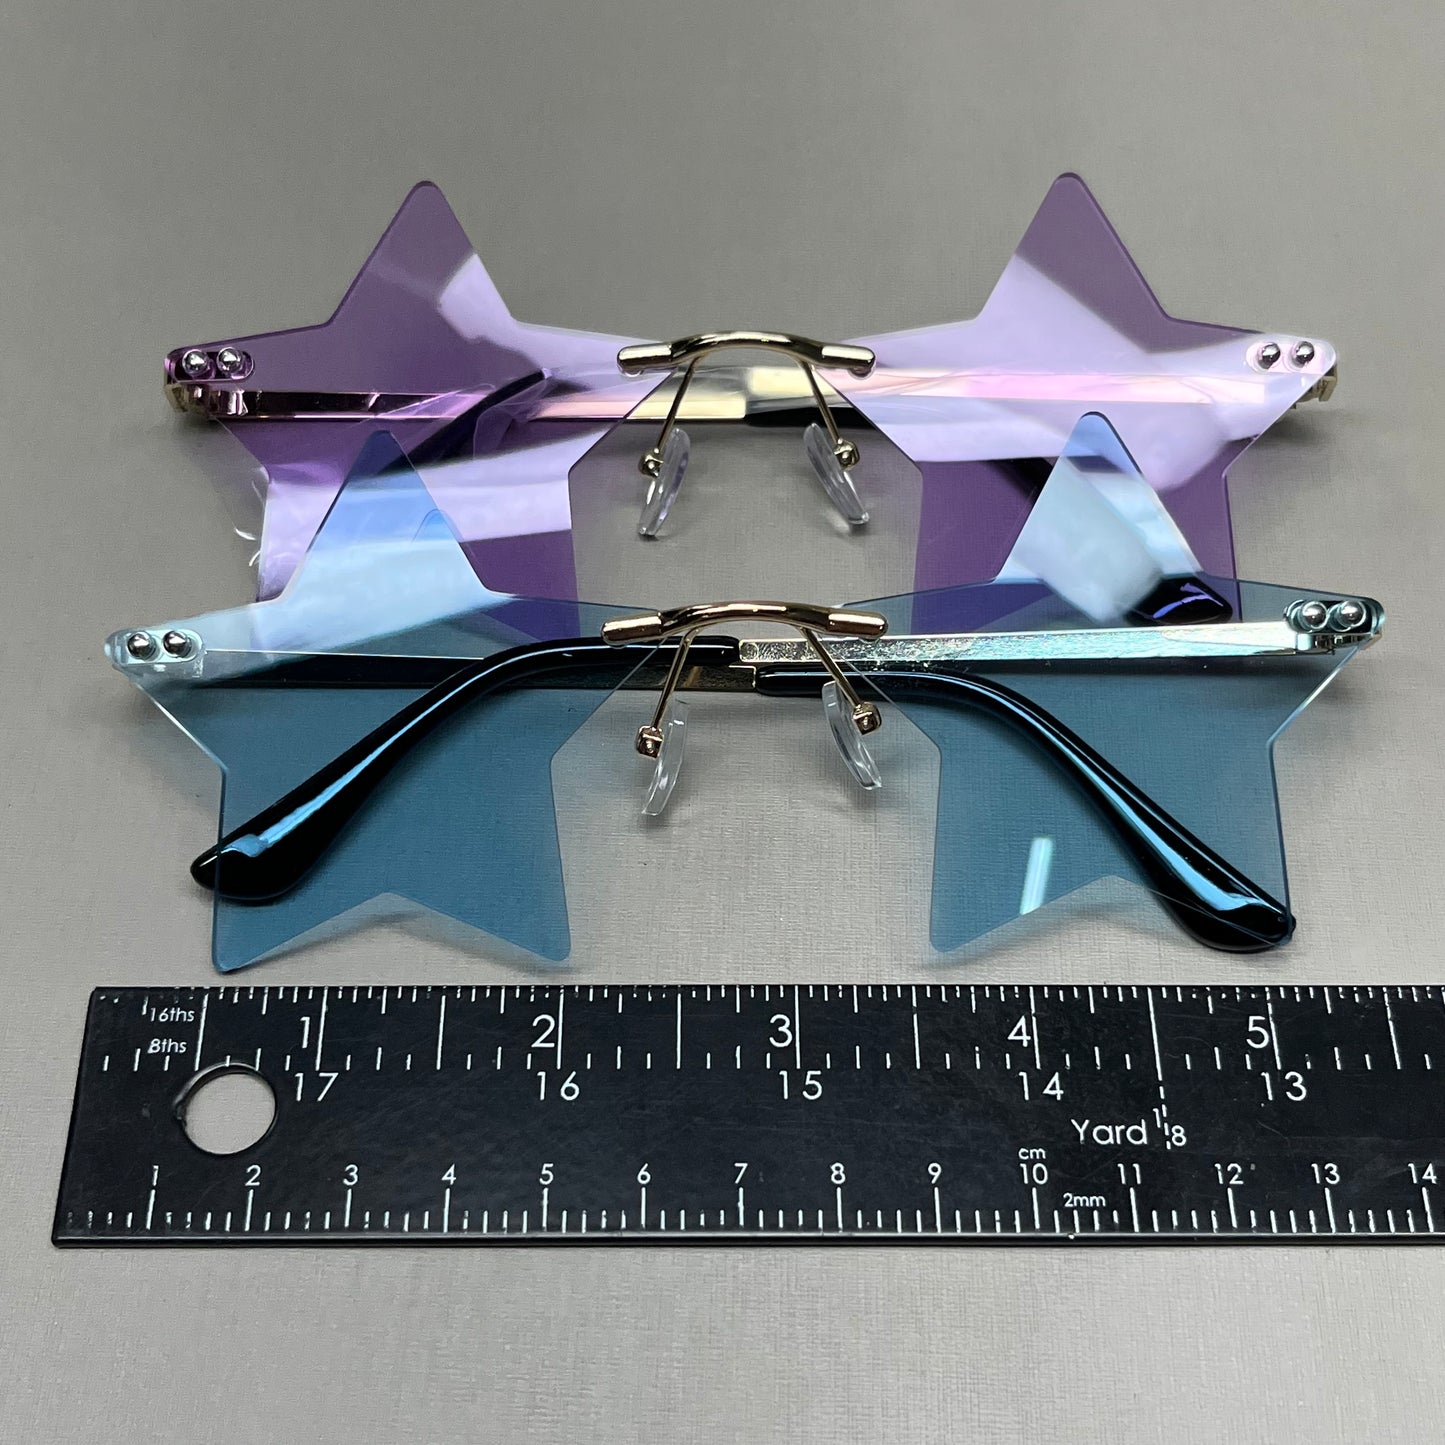 ENTHYI 2 Pack! Rimless Star Shape Sunglasses 1 Purple 1 Blue (New)